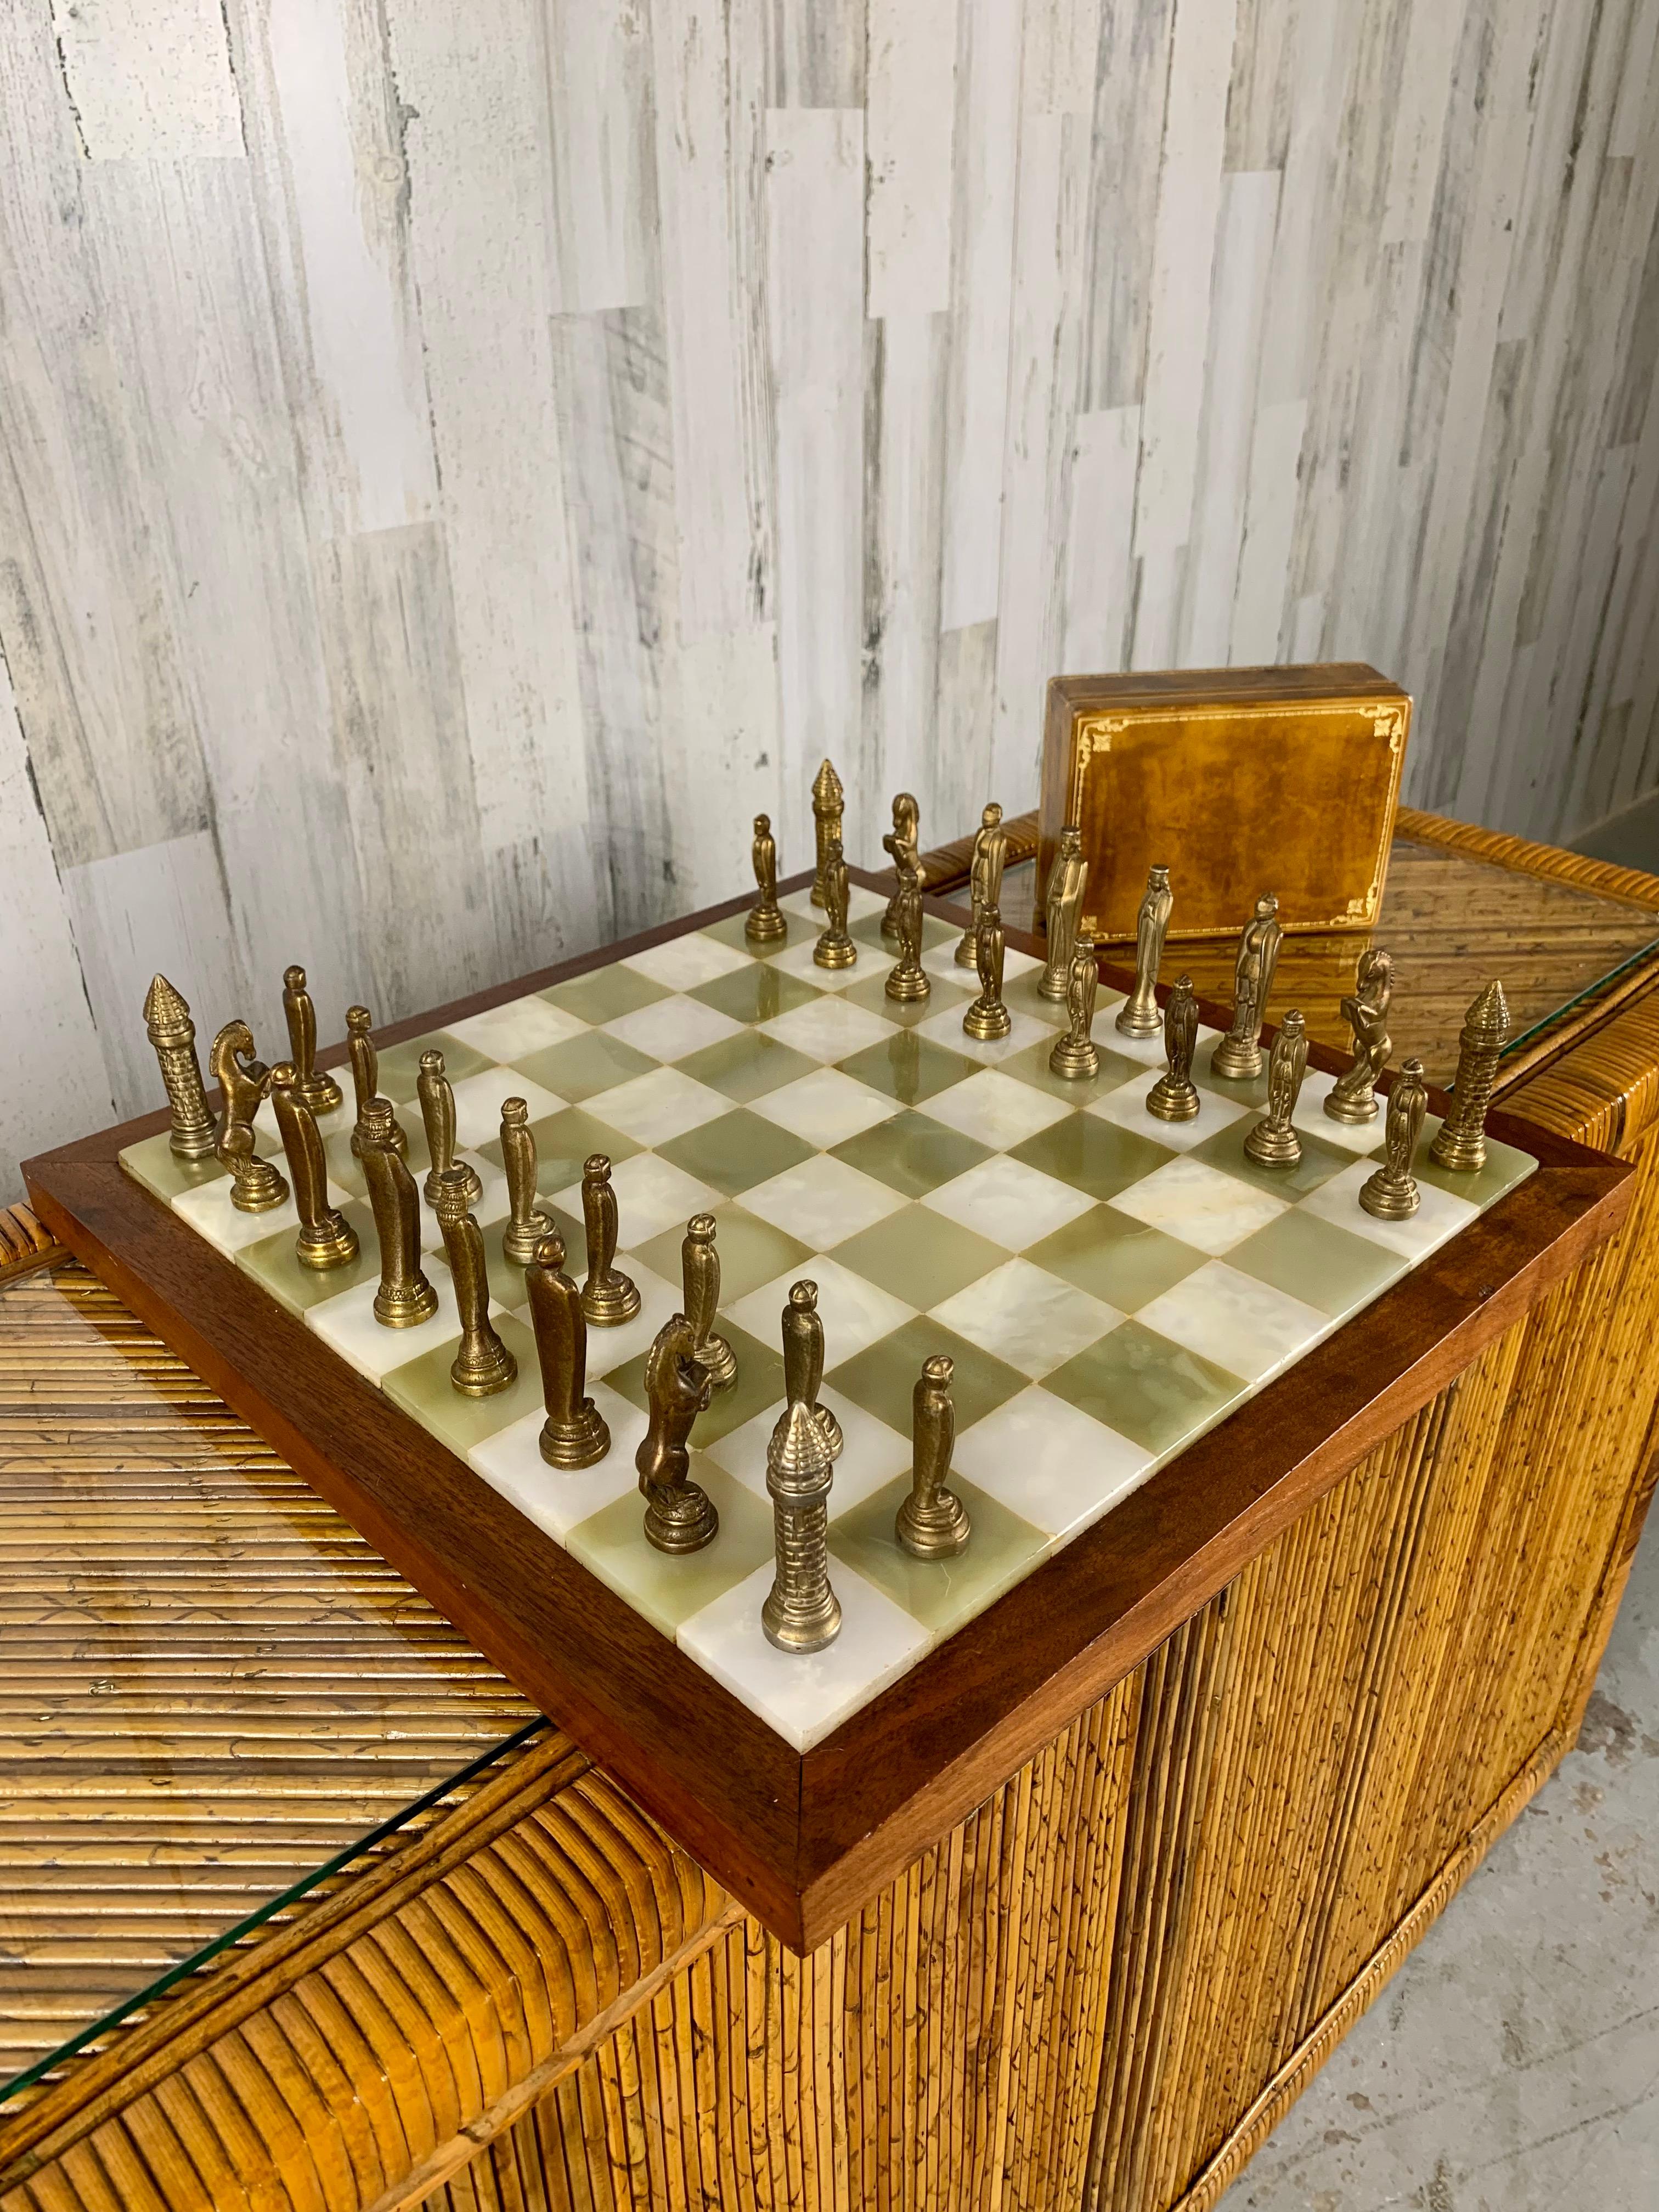 Modern Italian Onyx and Brass Chess Set